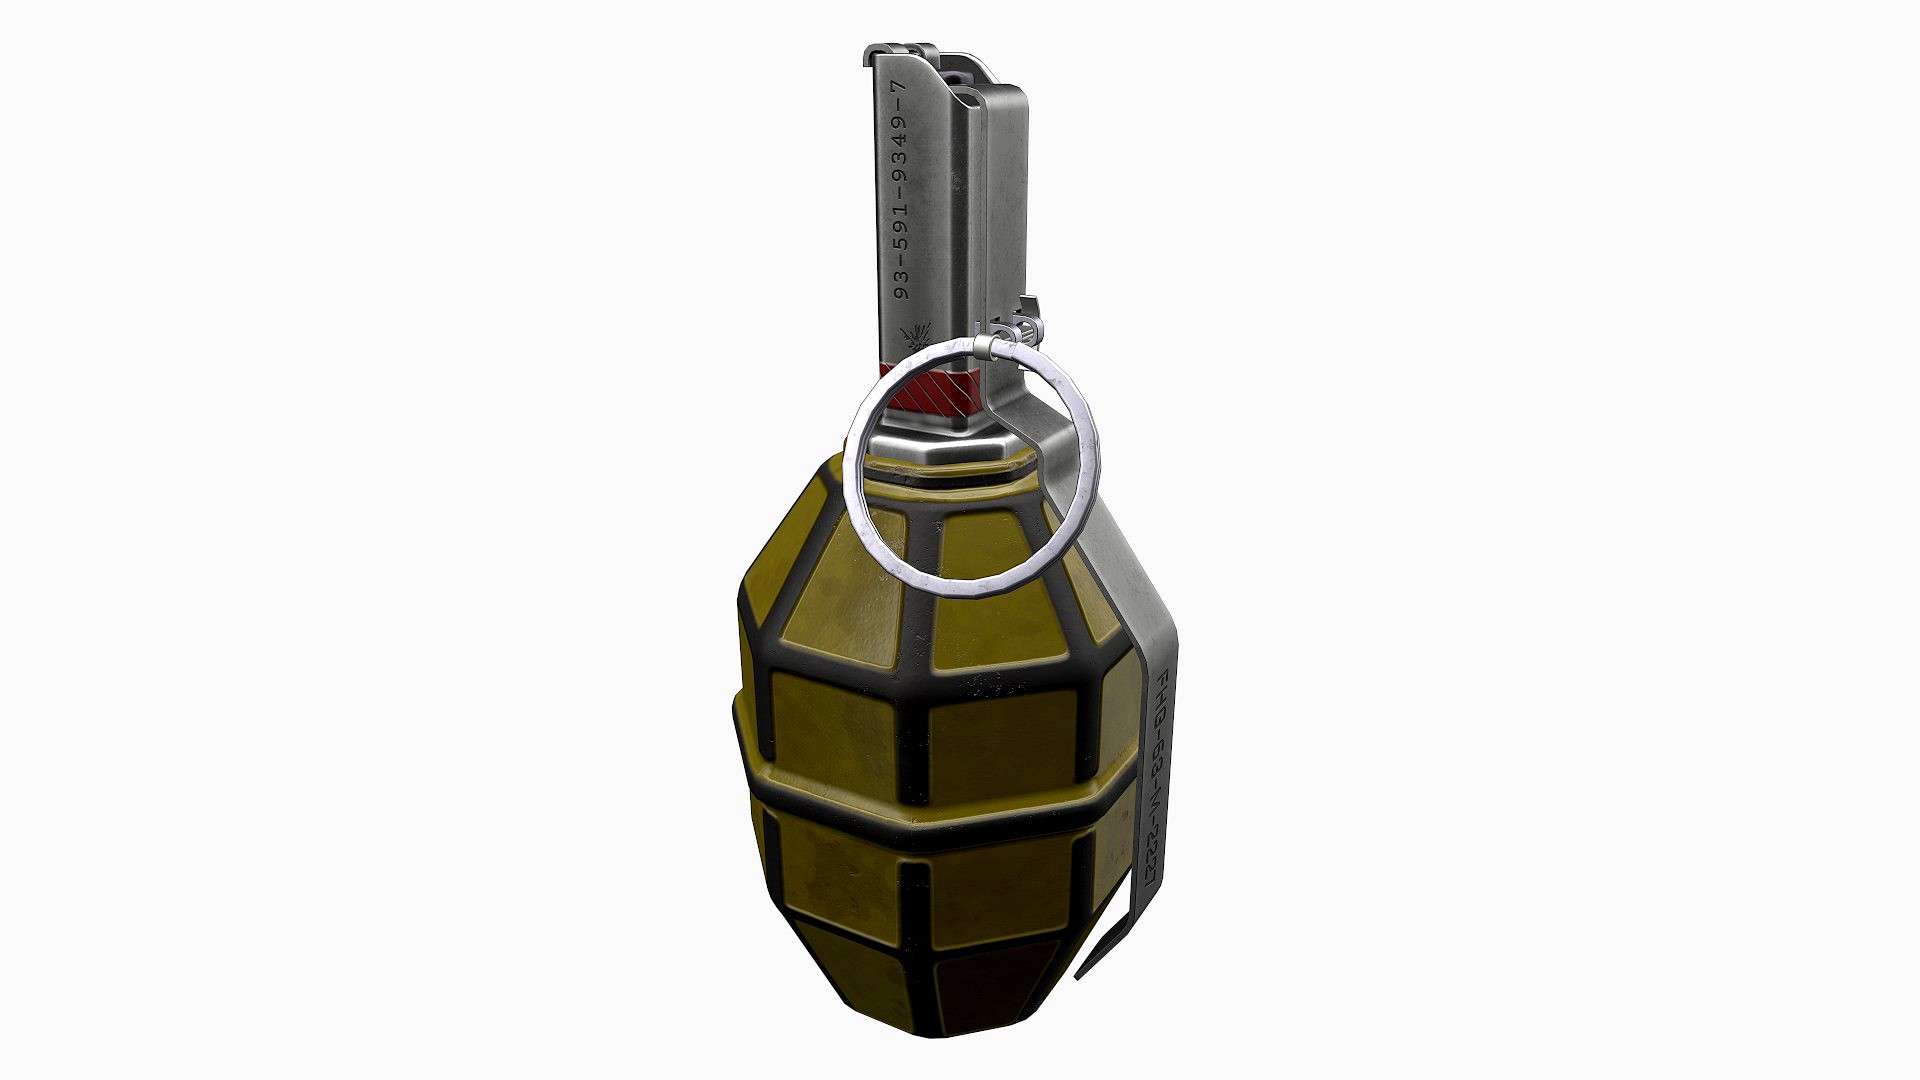 Frag grenade